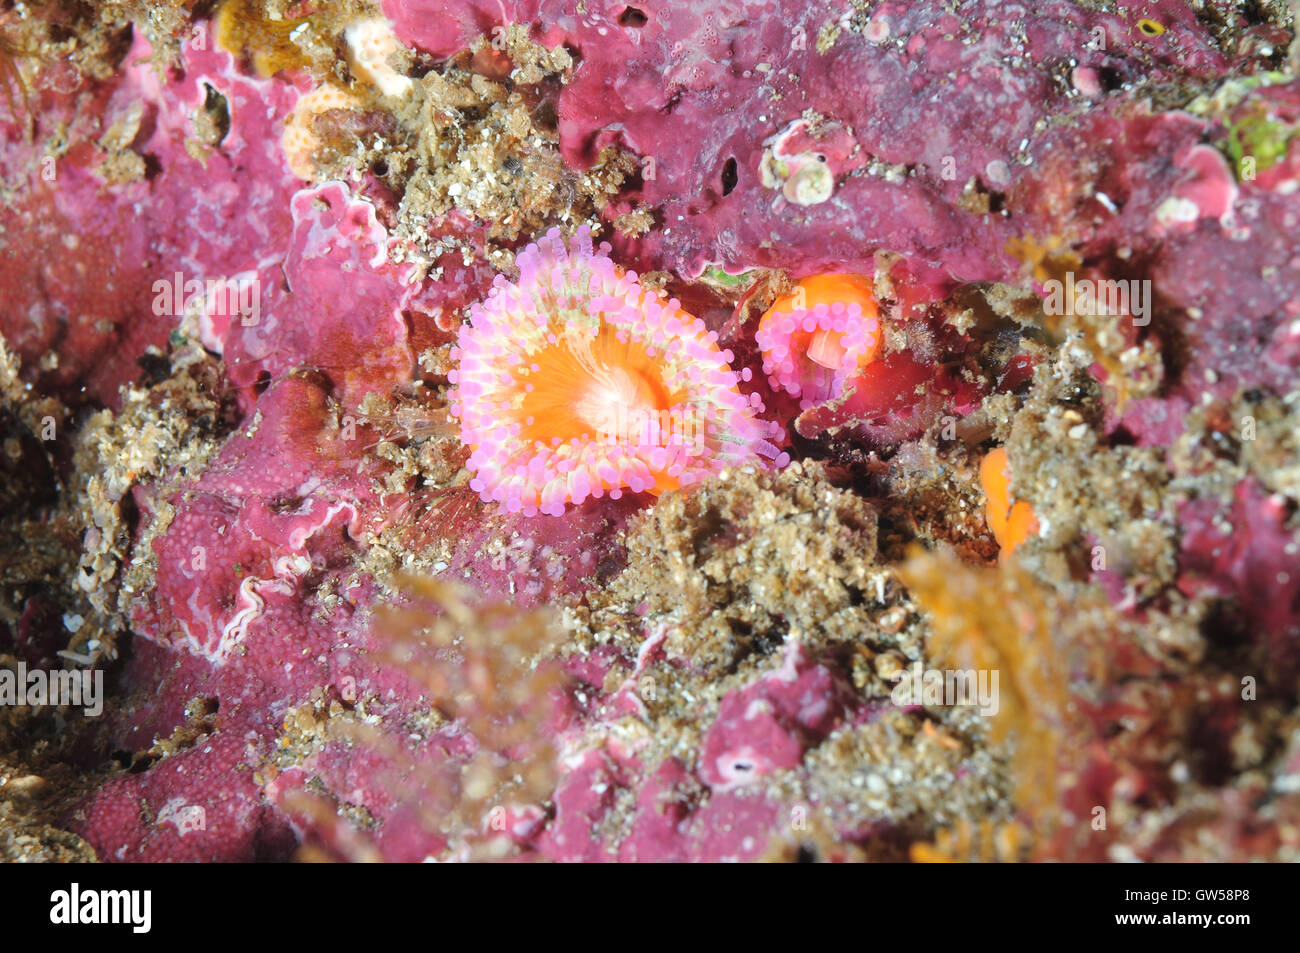 Two jewel anemones  among coralline algae Stock Photo